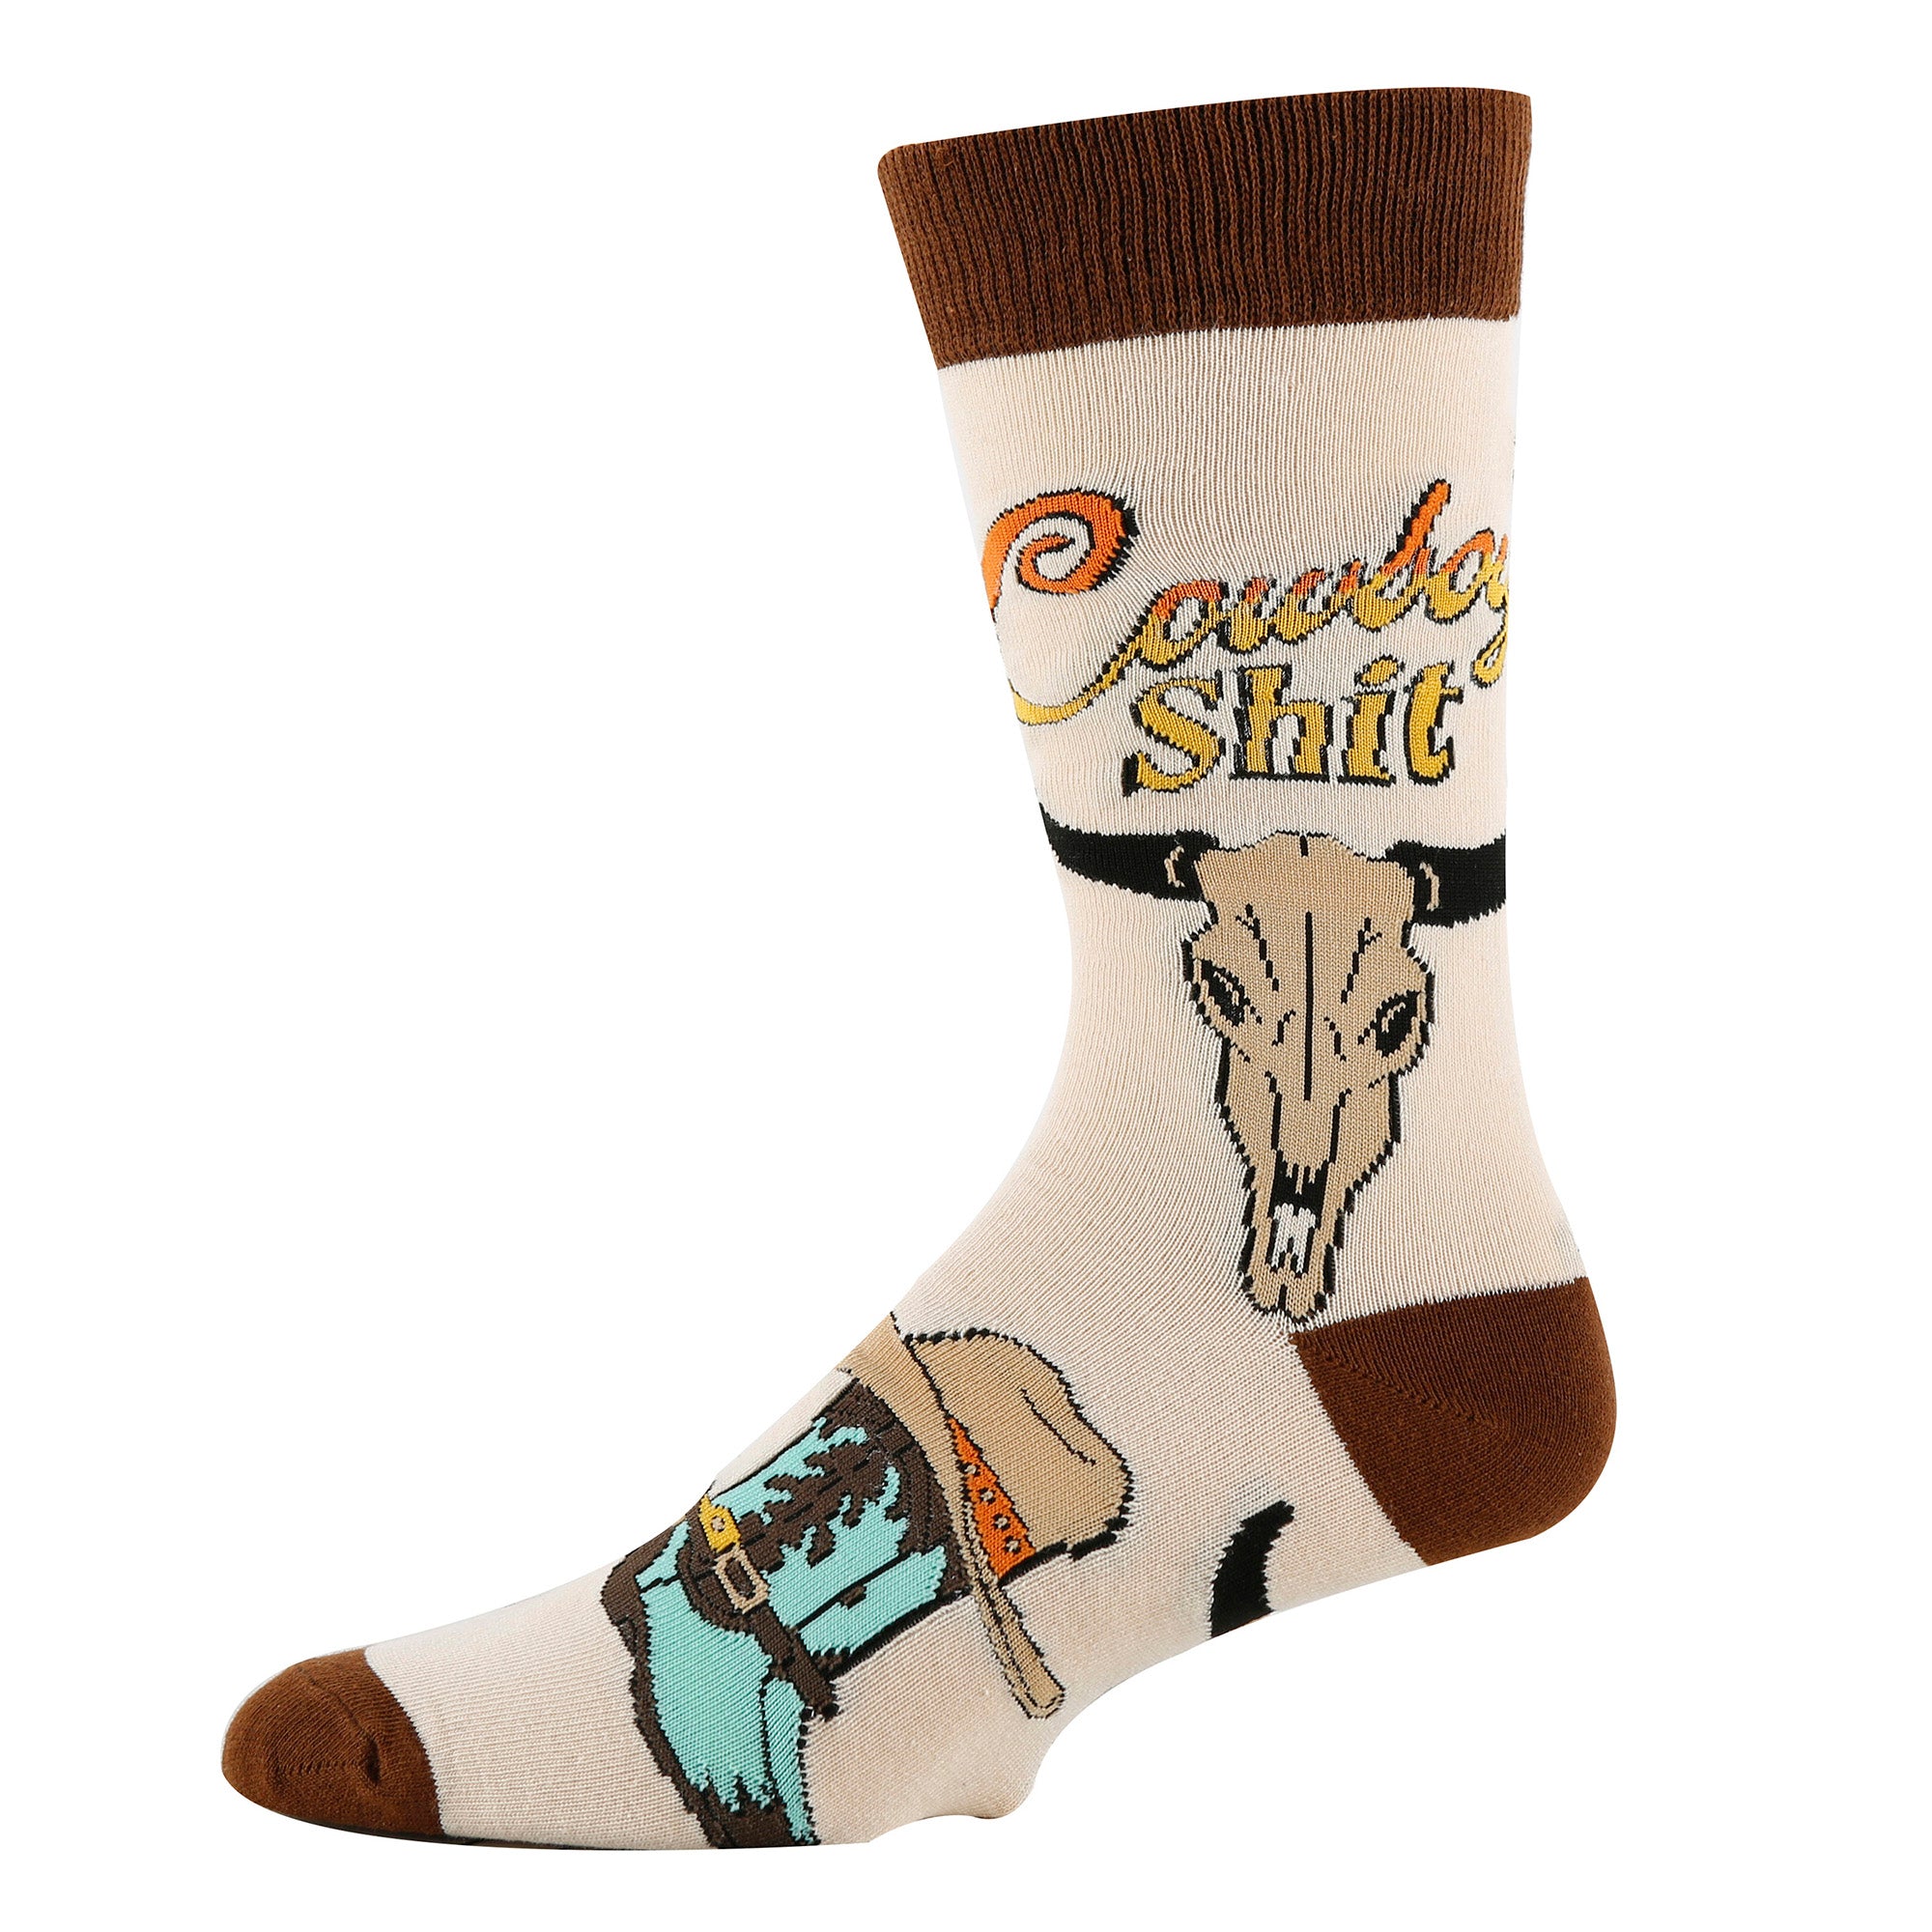 Cowboy Socks